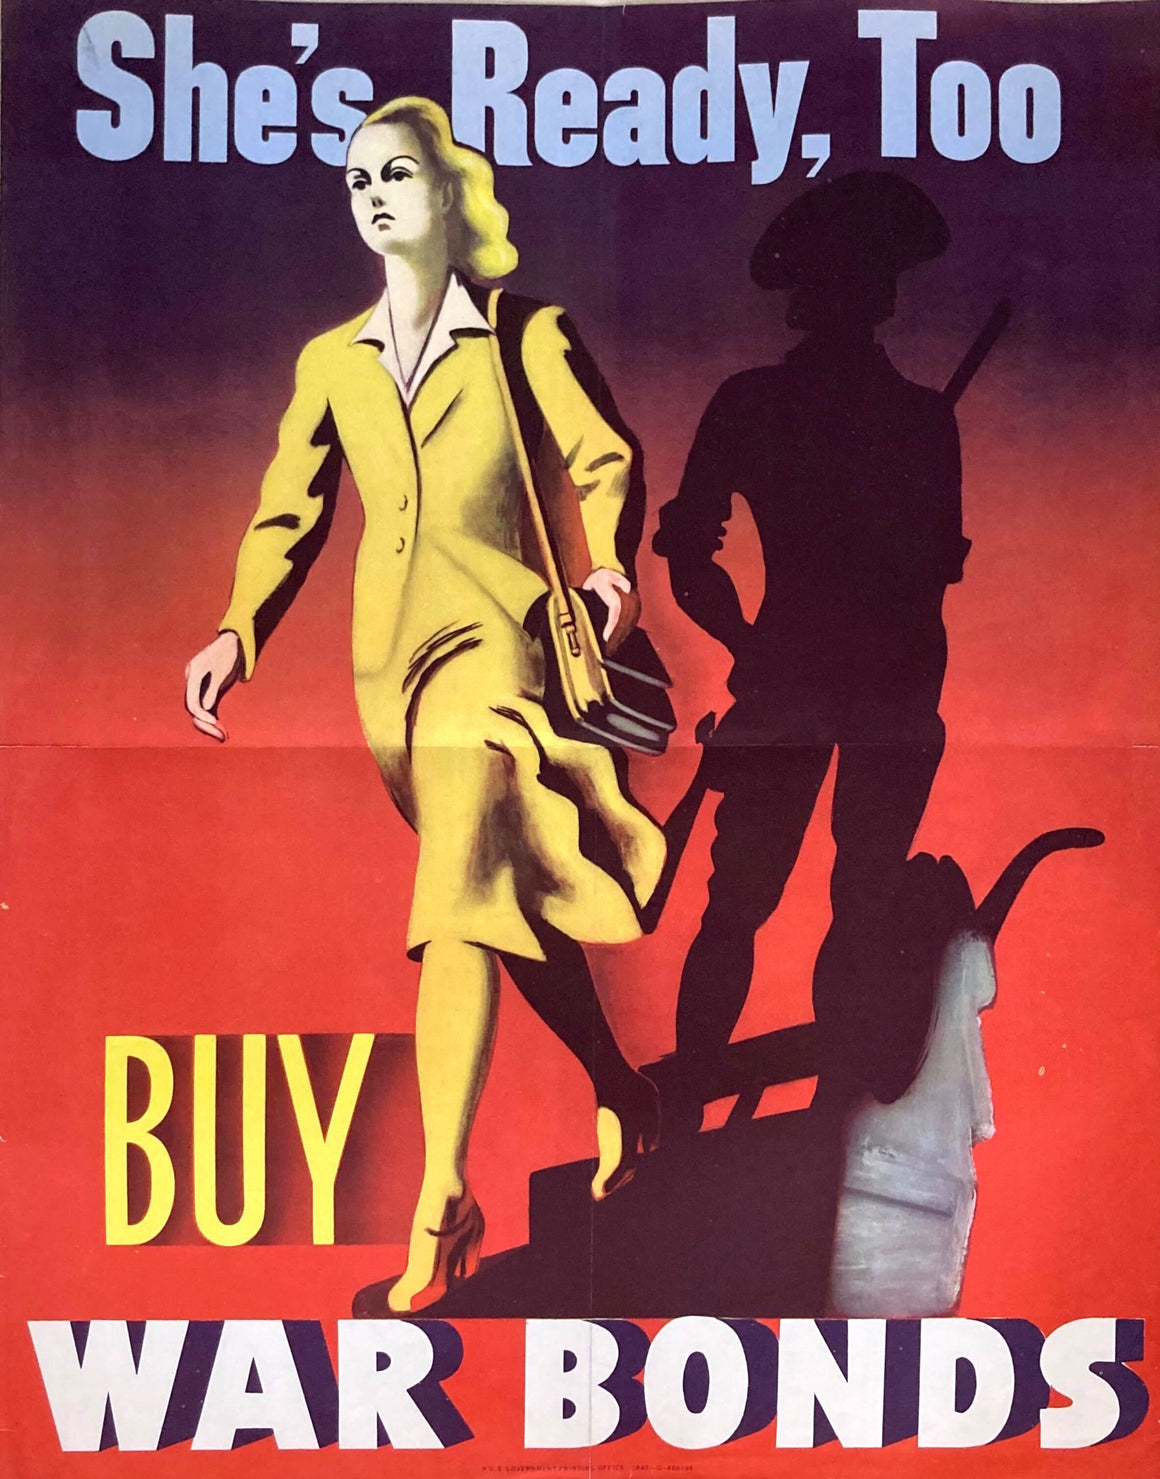 "She's Ready, Too. Buy War Bonds" Vintage WWII Bonds Poster, 1942